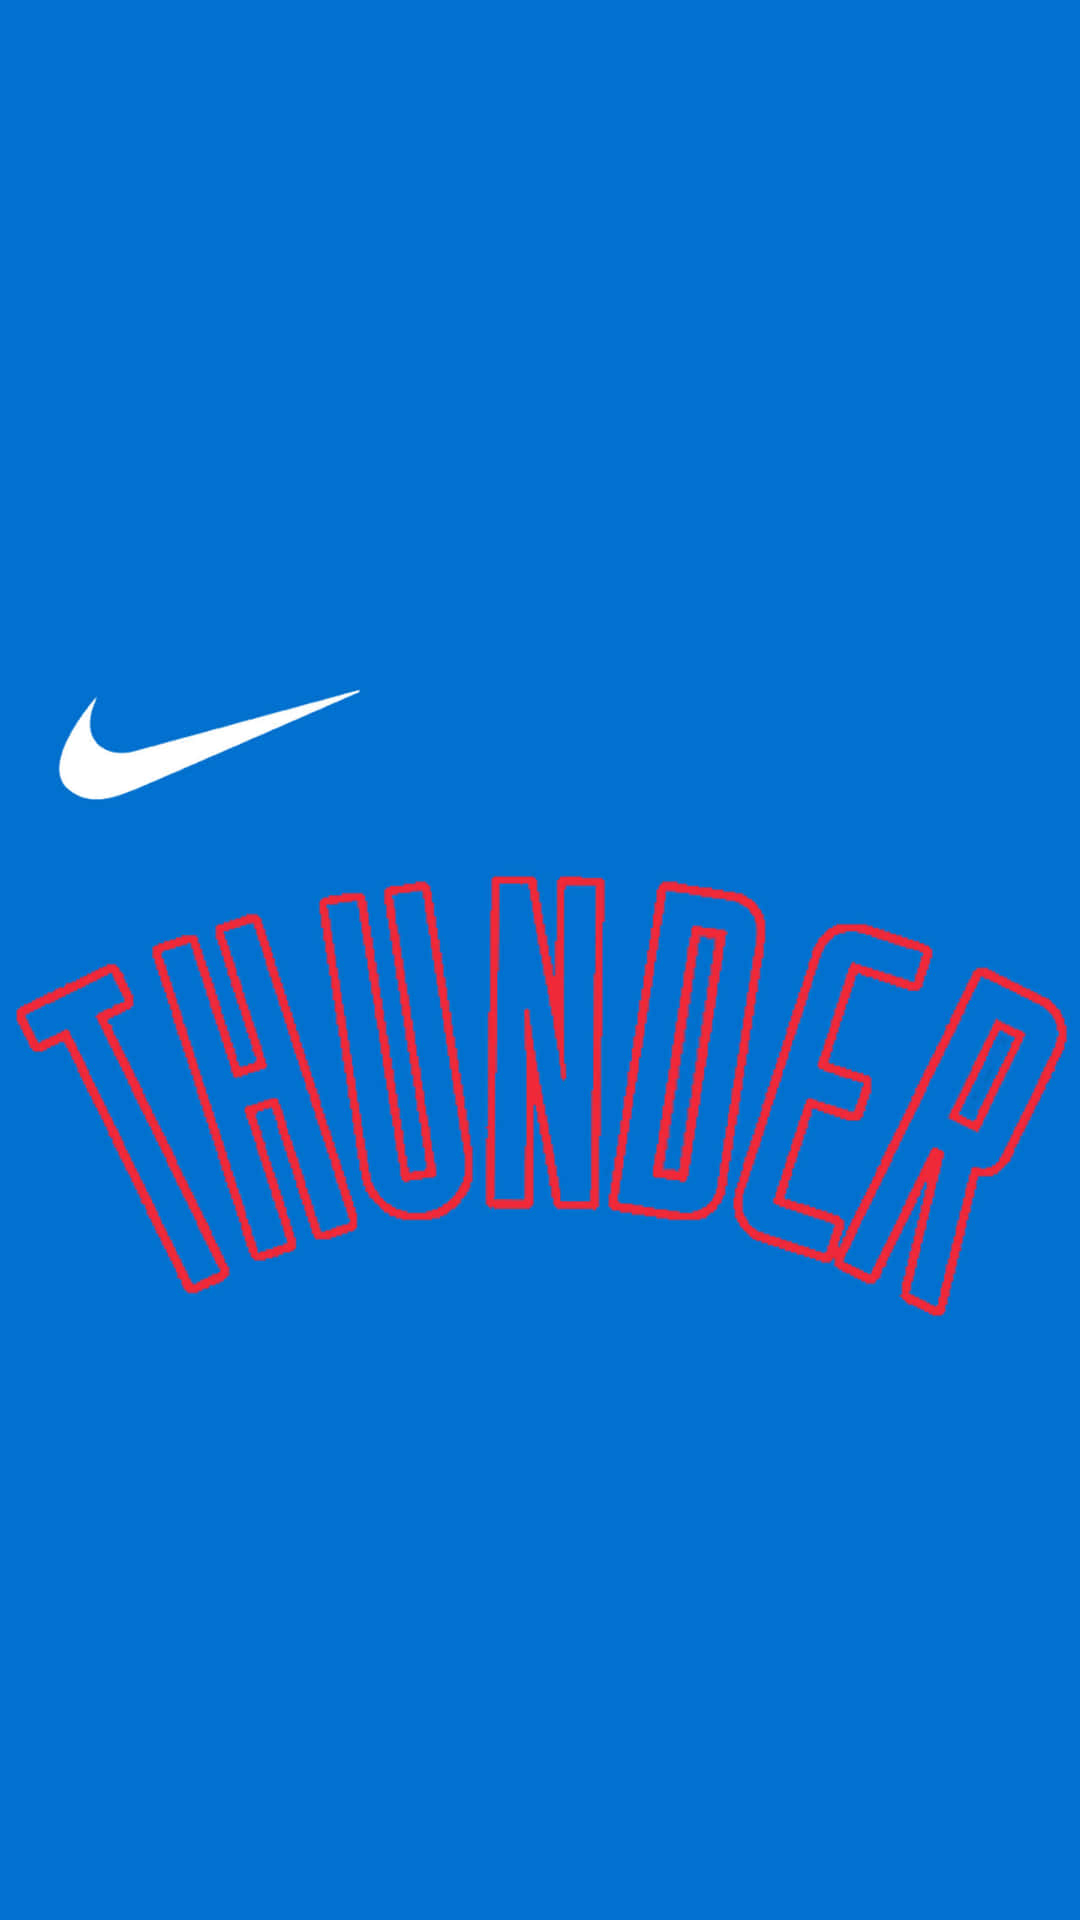 NBA League Team Oklahoma City Thunders Team Name Wallpaper